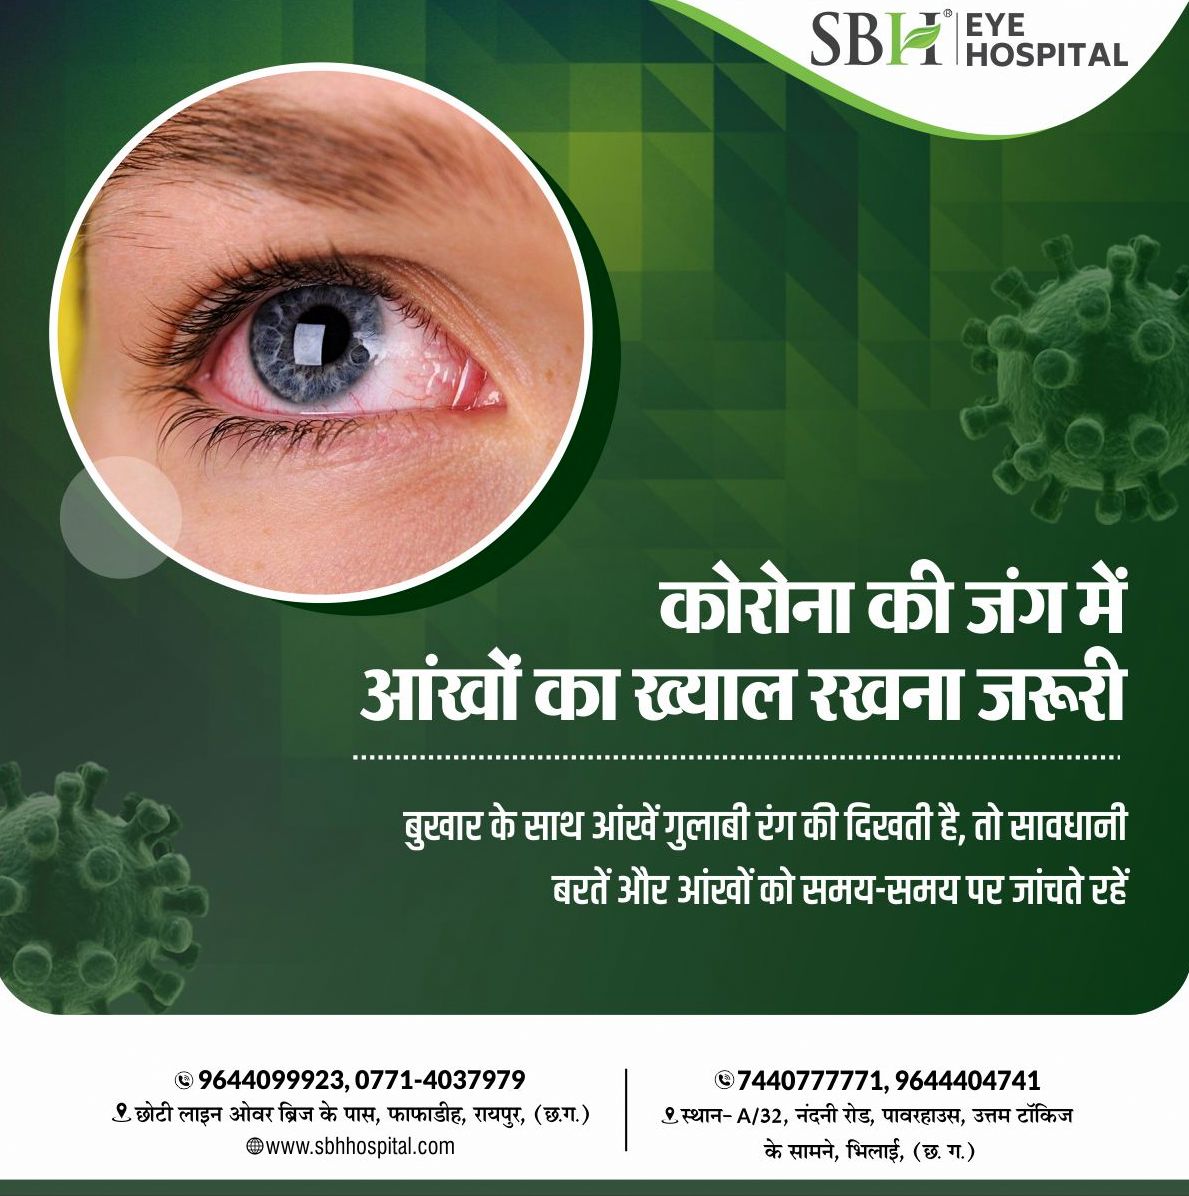 Sai Baba Eye Hospital|Clinics|Medical Services